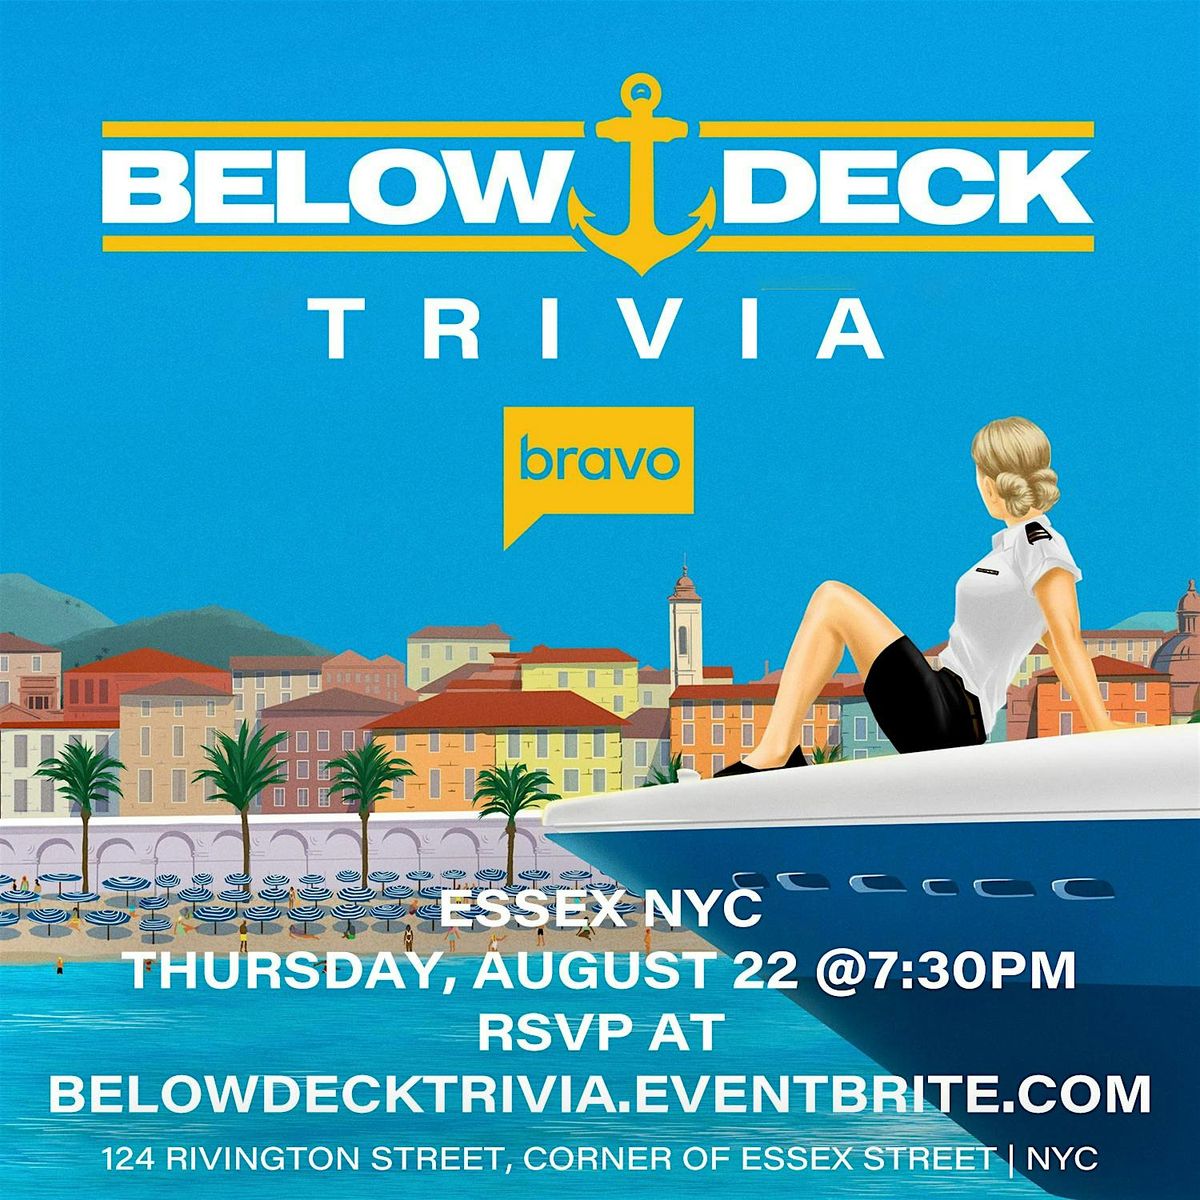 Below Deck Trivia